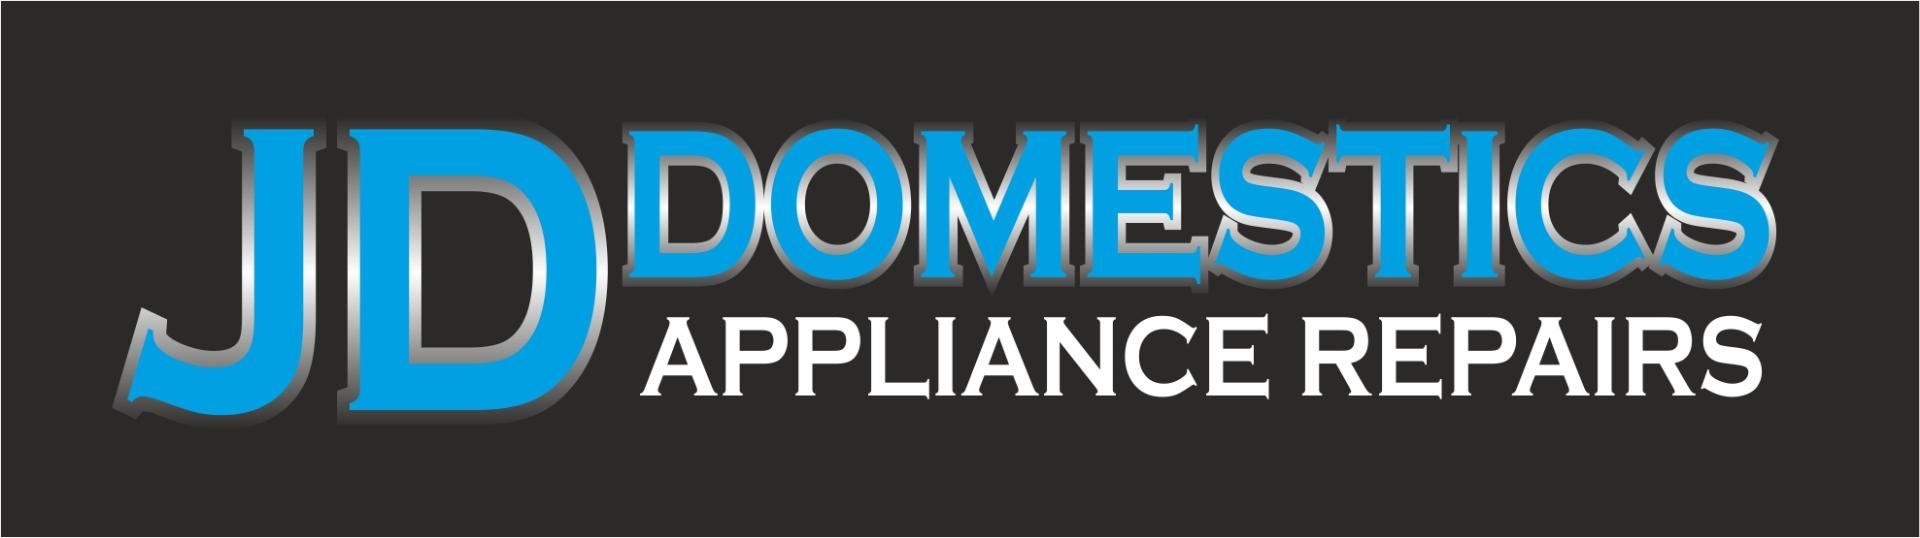 JD Domestics - Appliance Repair Specialists in Ashley Cross / Lower Parkstone